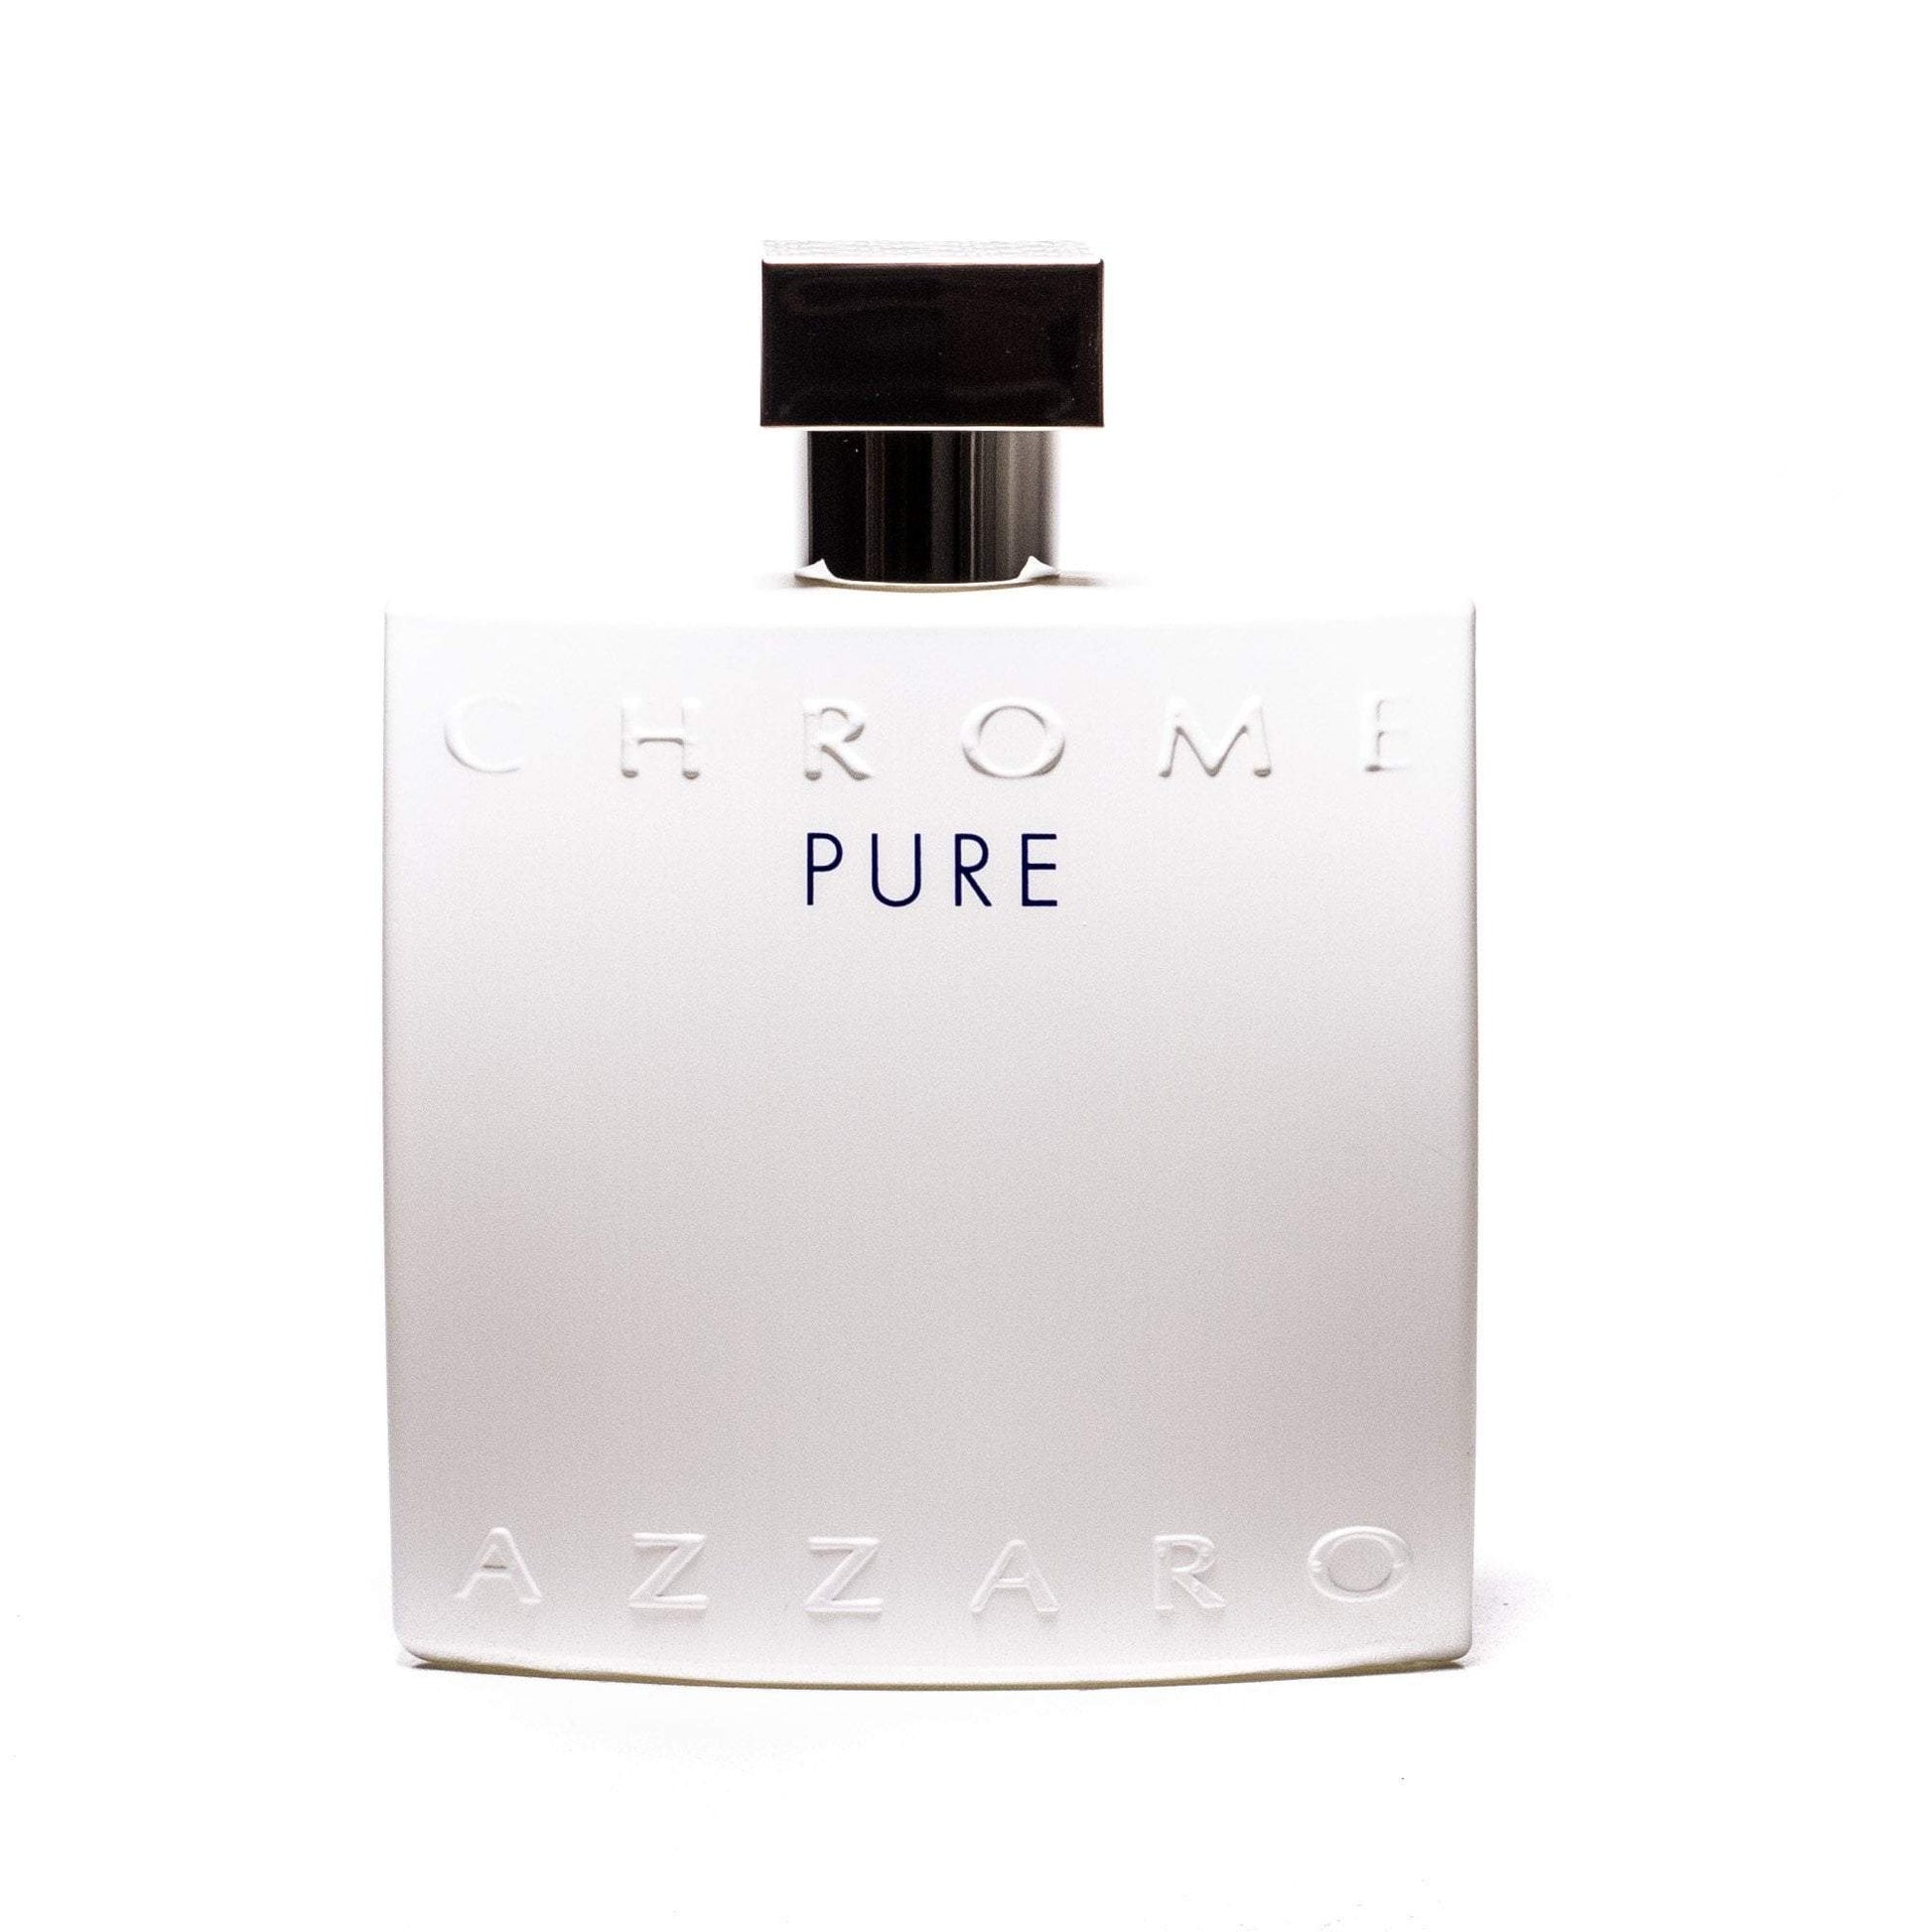 Chrome Pure Eau de Toilette Spray for Men by Azzaro 3.4 oz. Click to open in modal